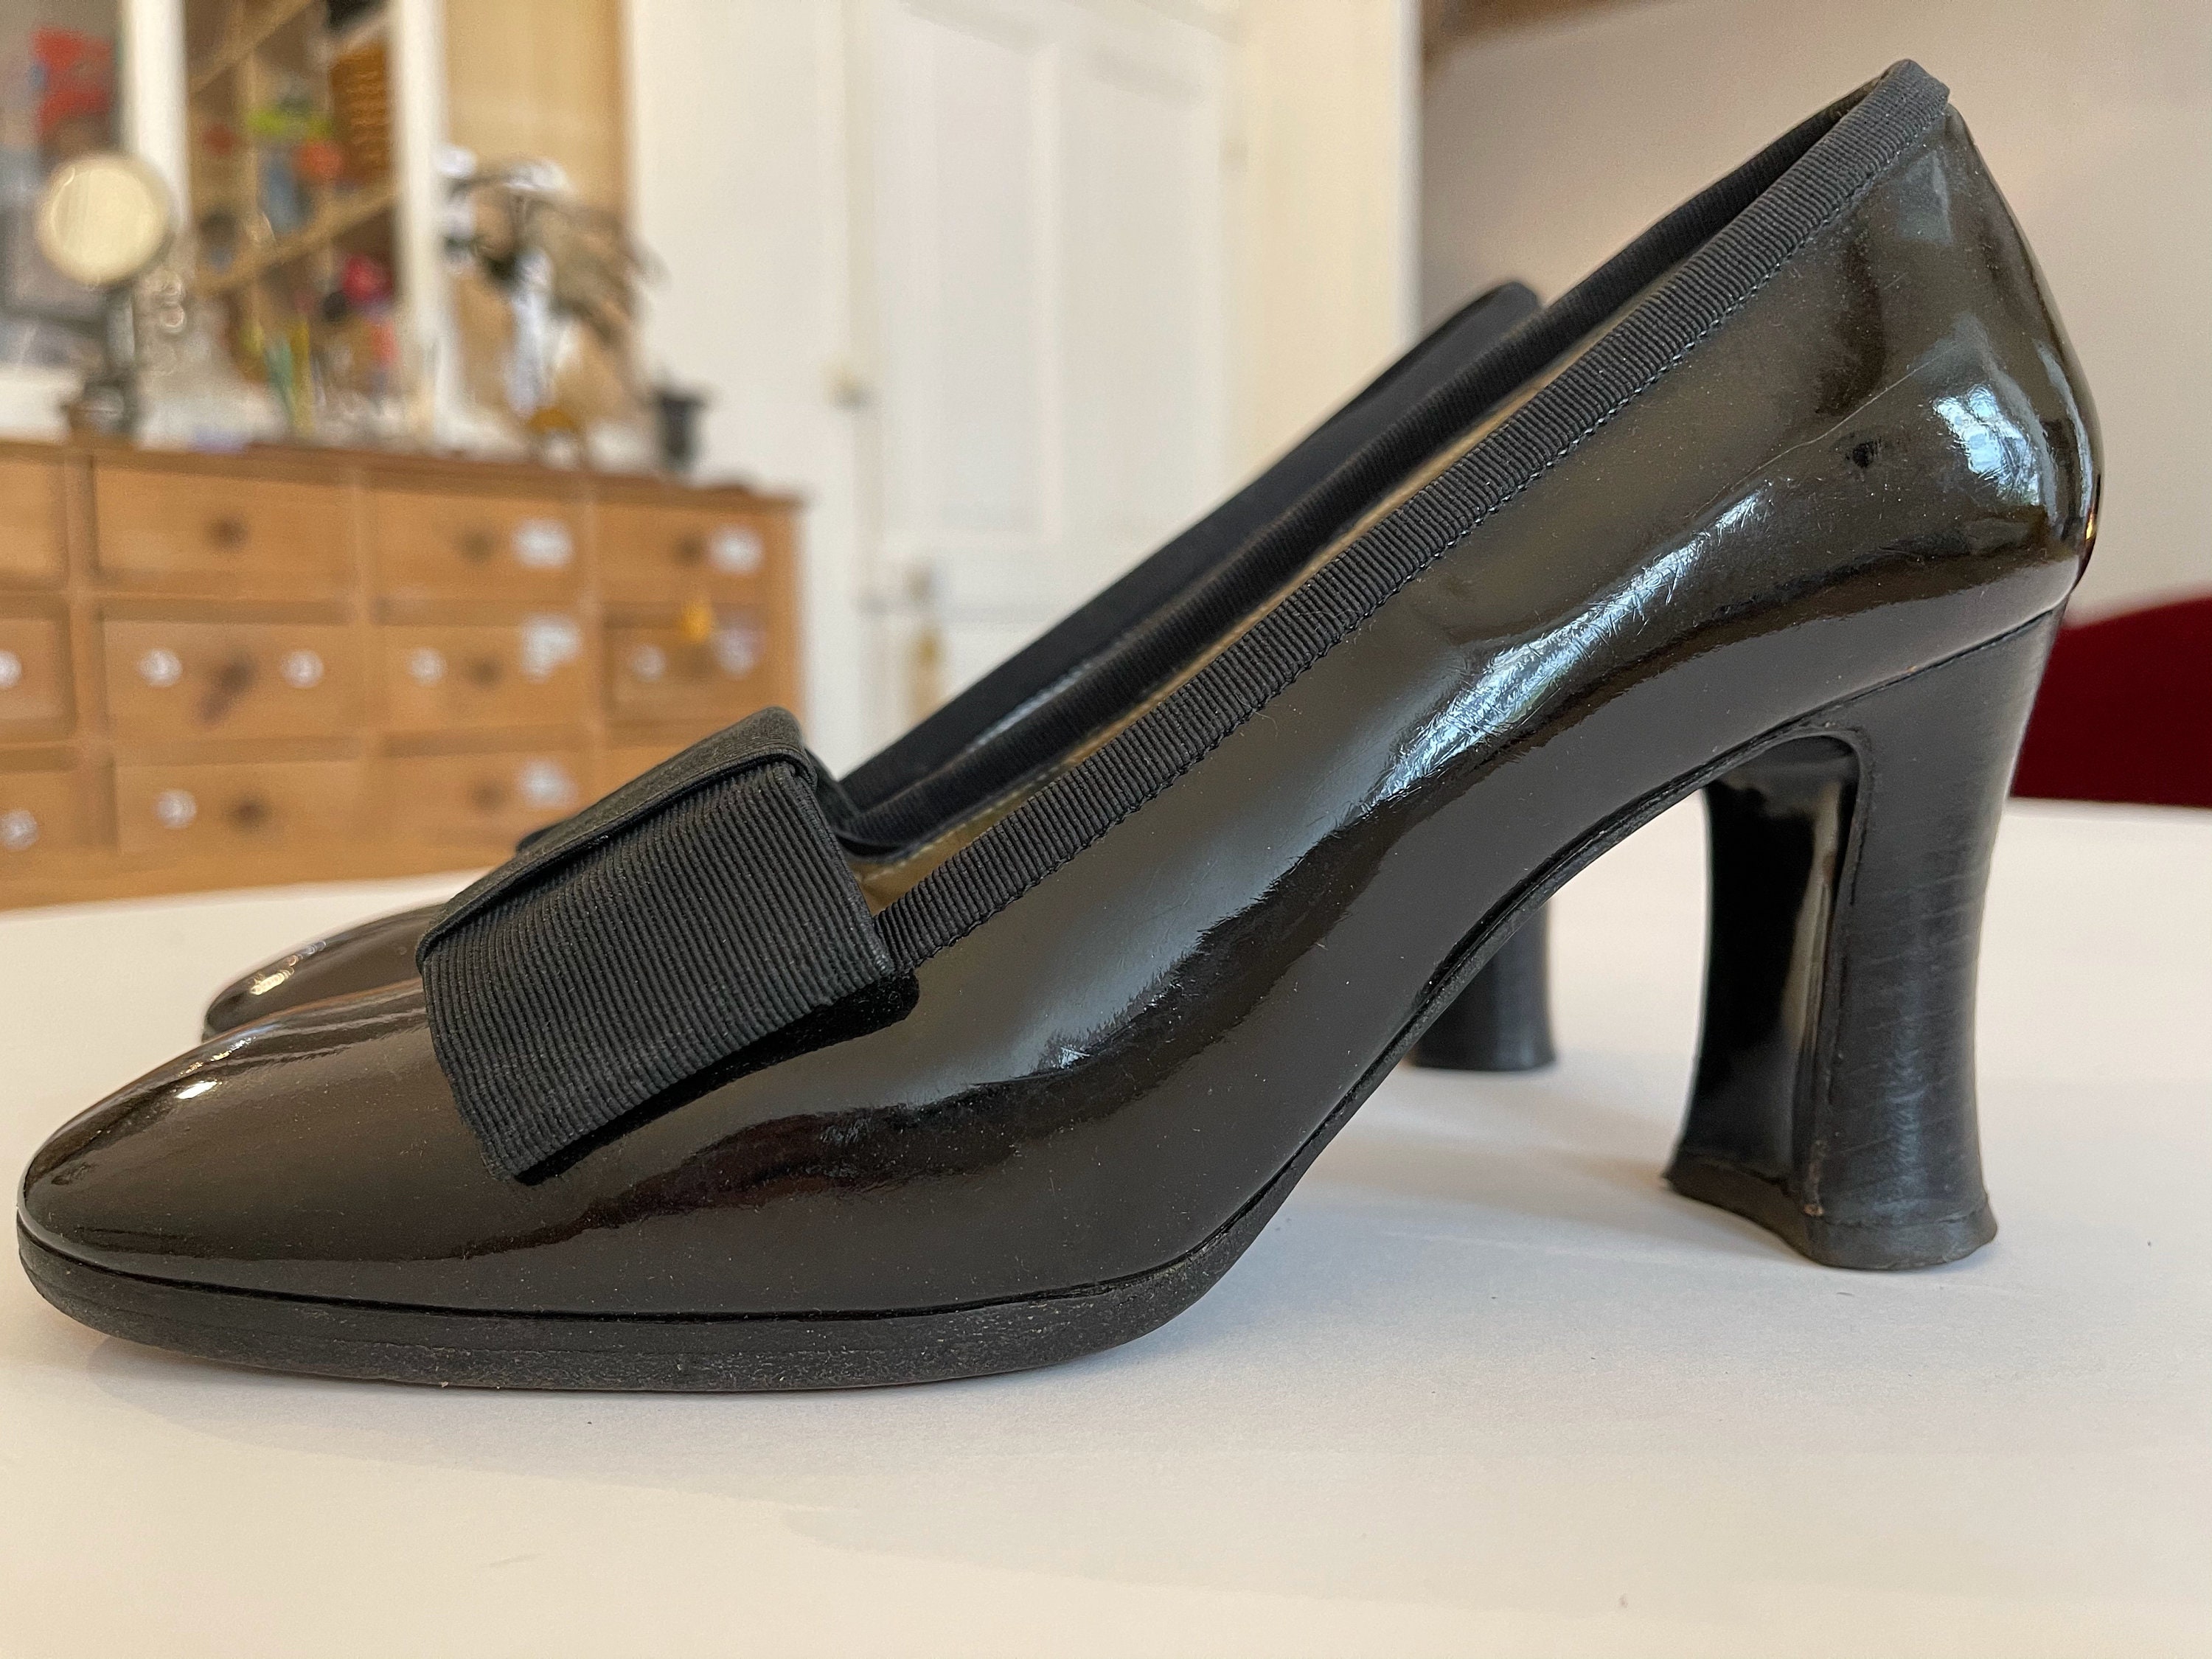 Yves Saint Laurent Pumps Shoes Black Patent Leather and Node | Etsy